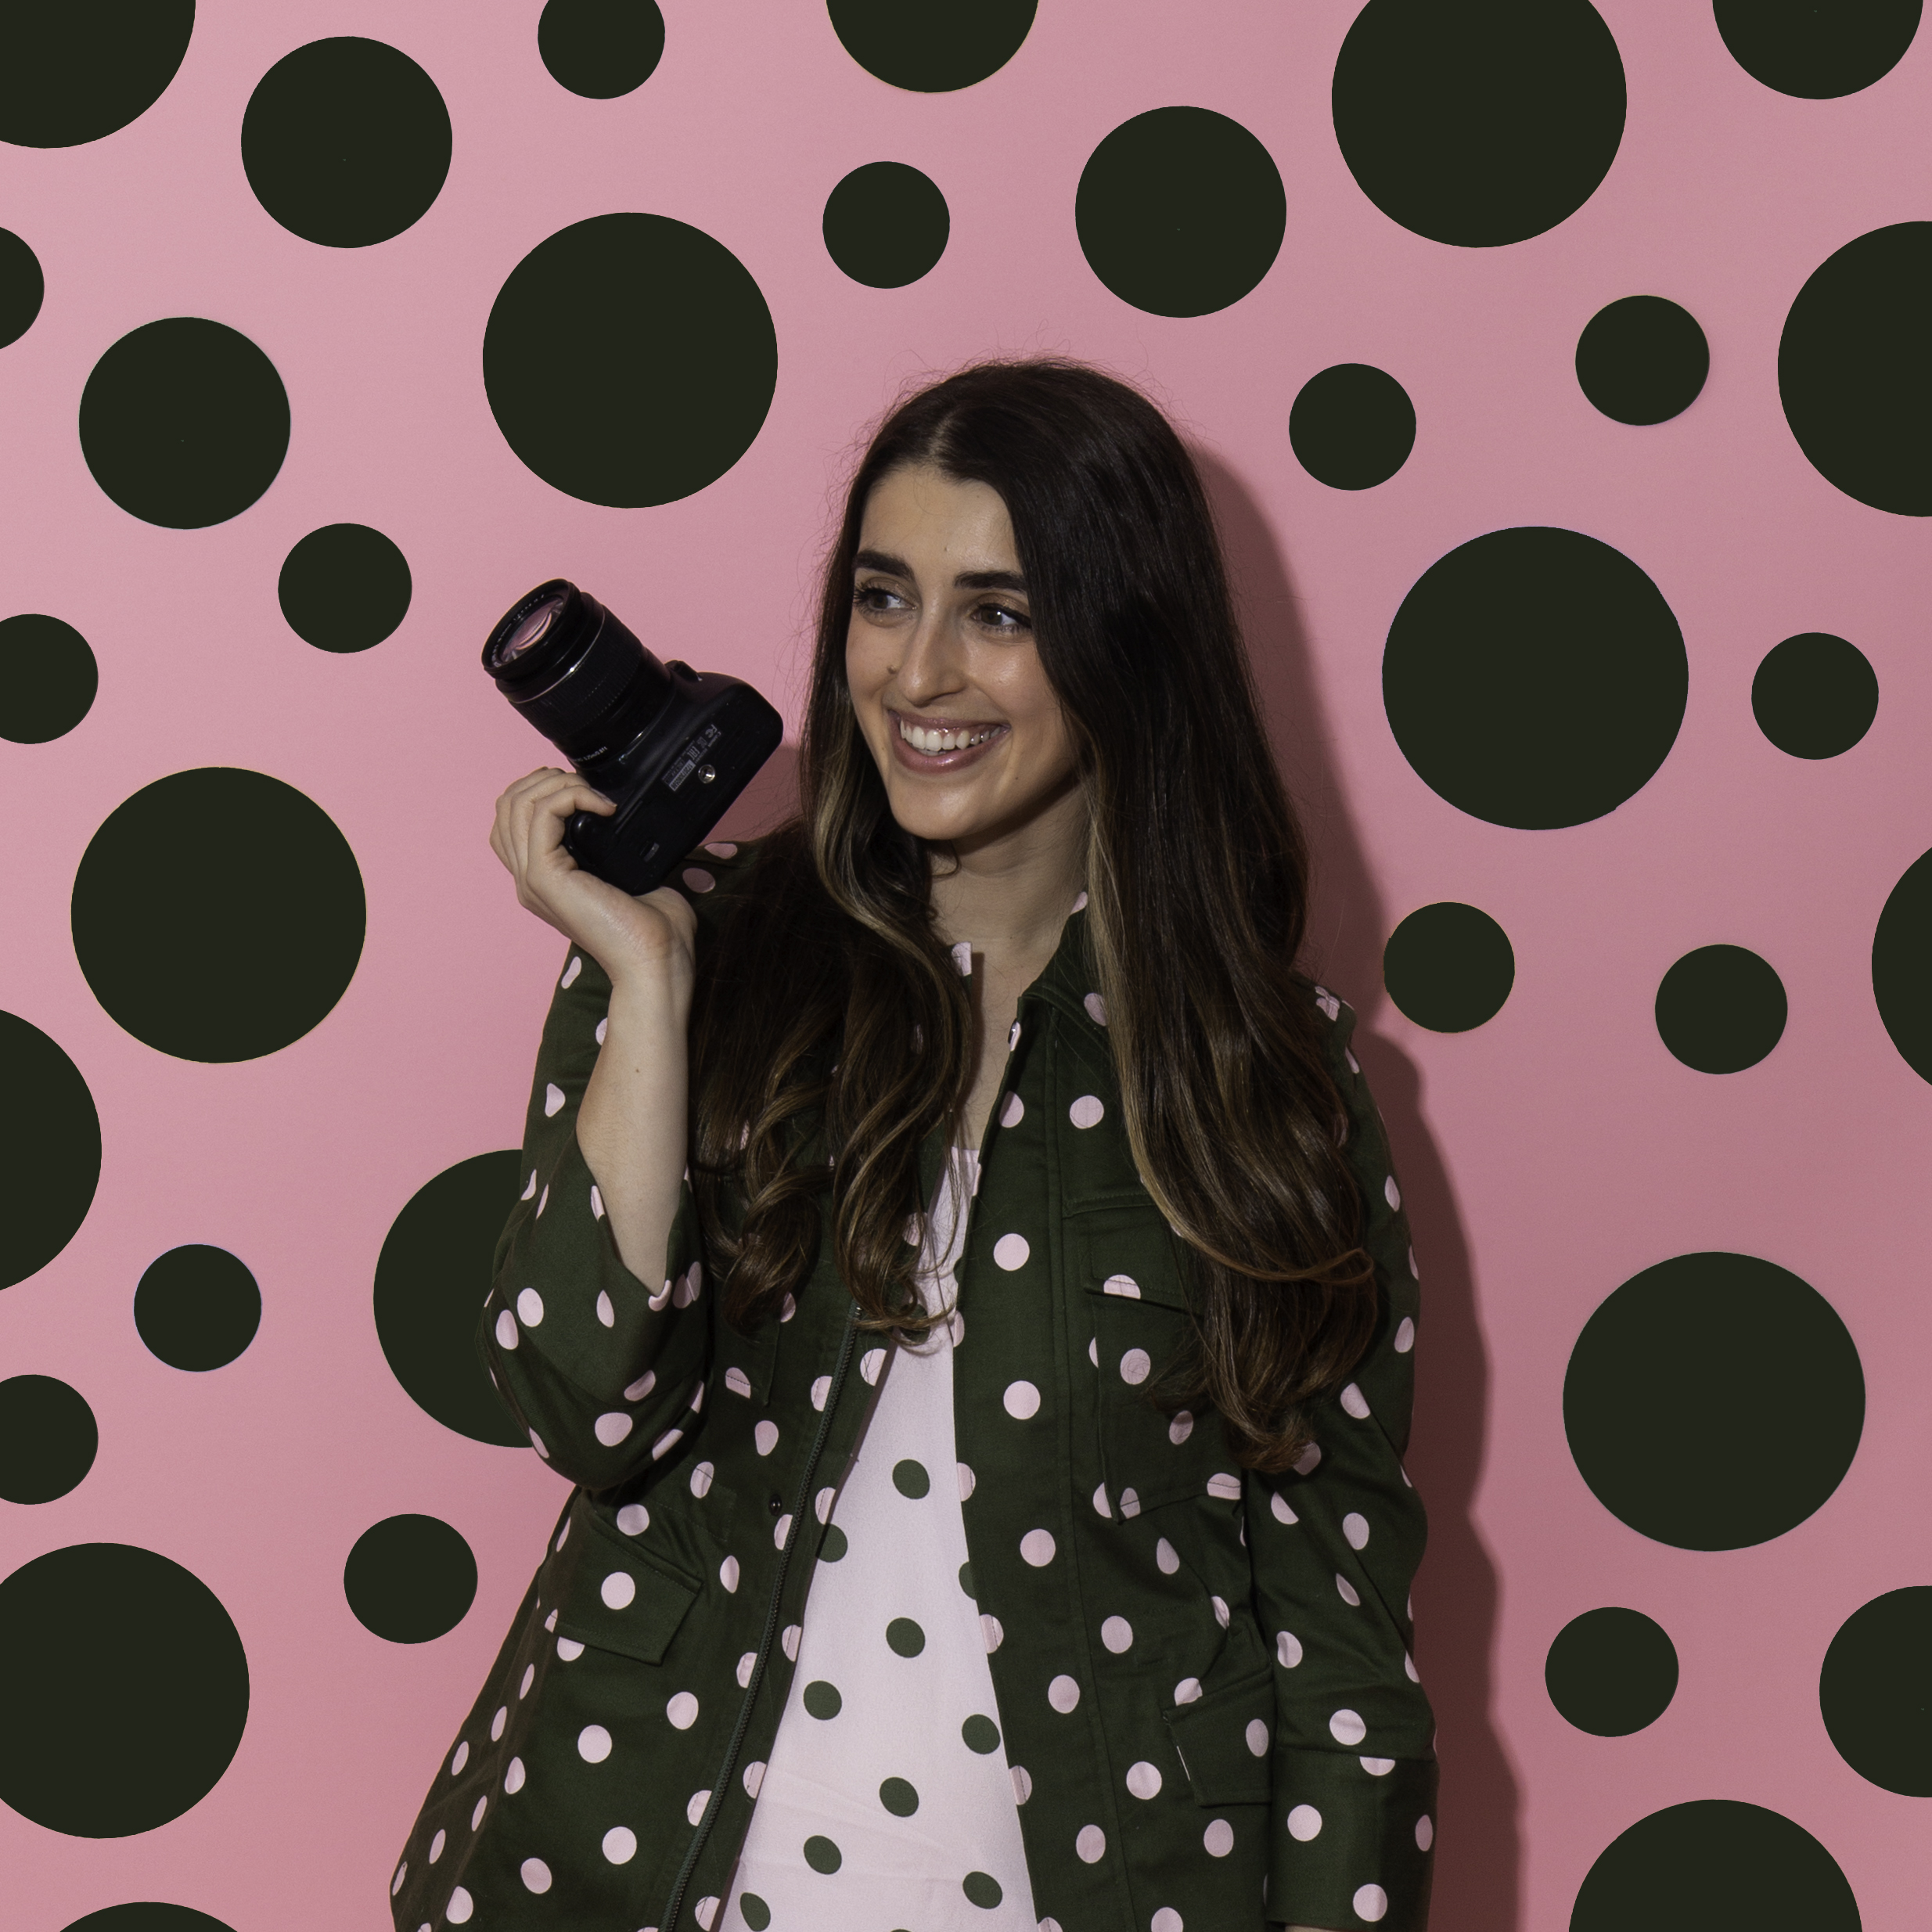 alisha holding camera in front of polka dot background